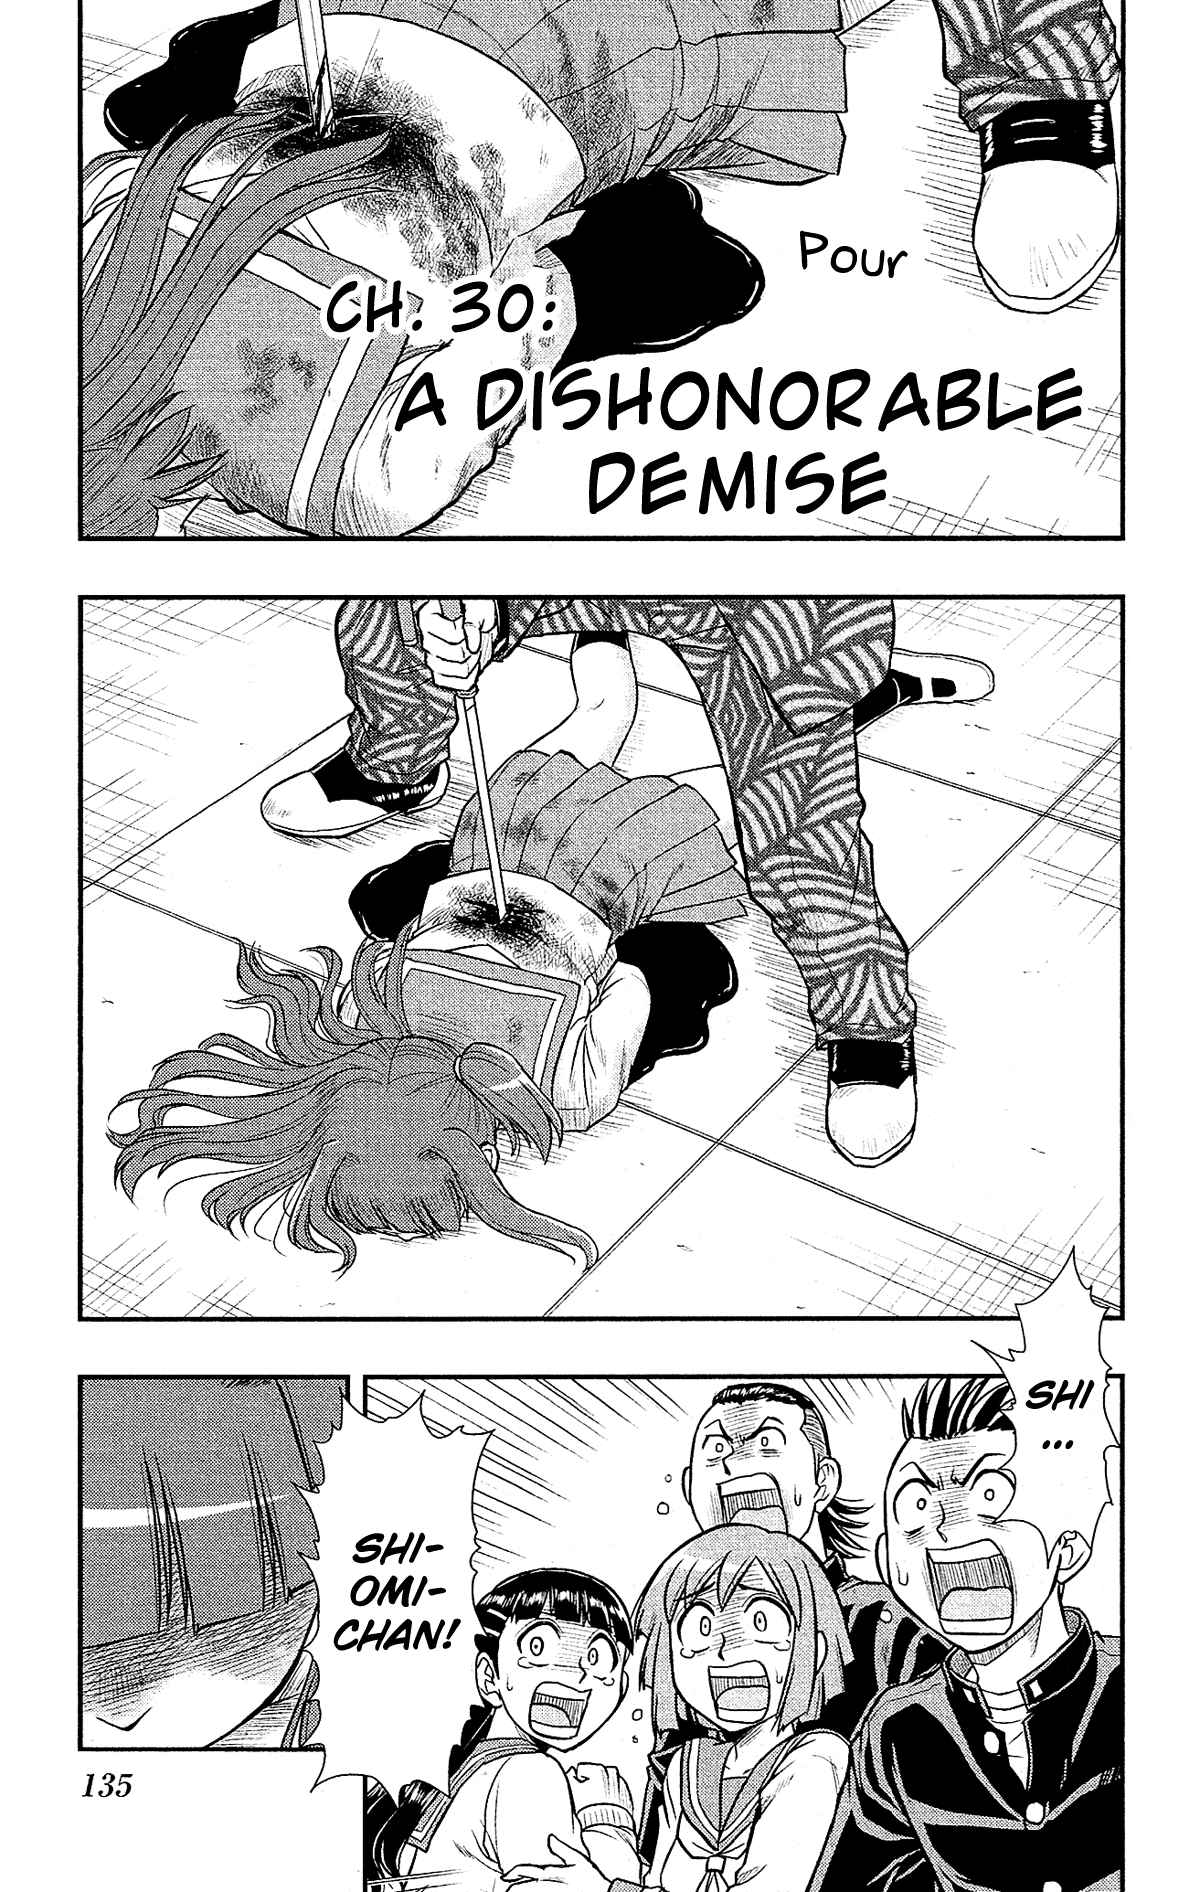 Shitei Bouryoku Shoujo Shiomi chan Vol. 5 Ch. 30 A Dishonorable Demise